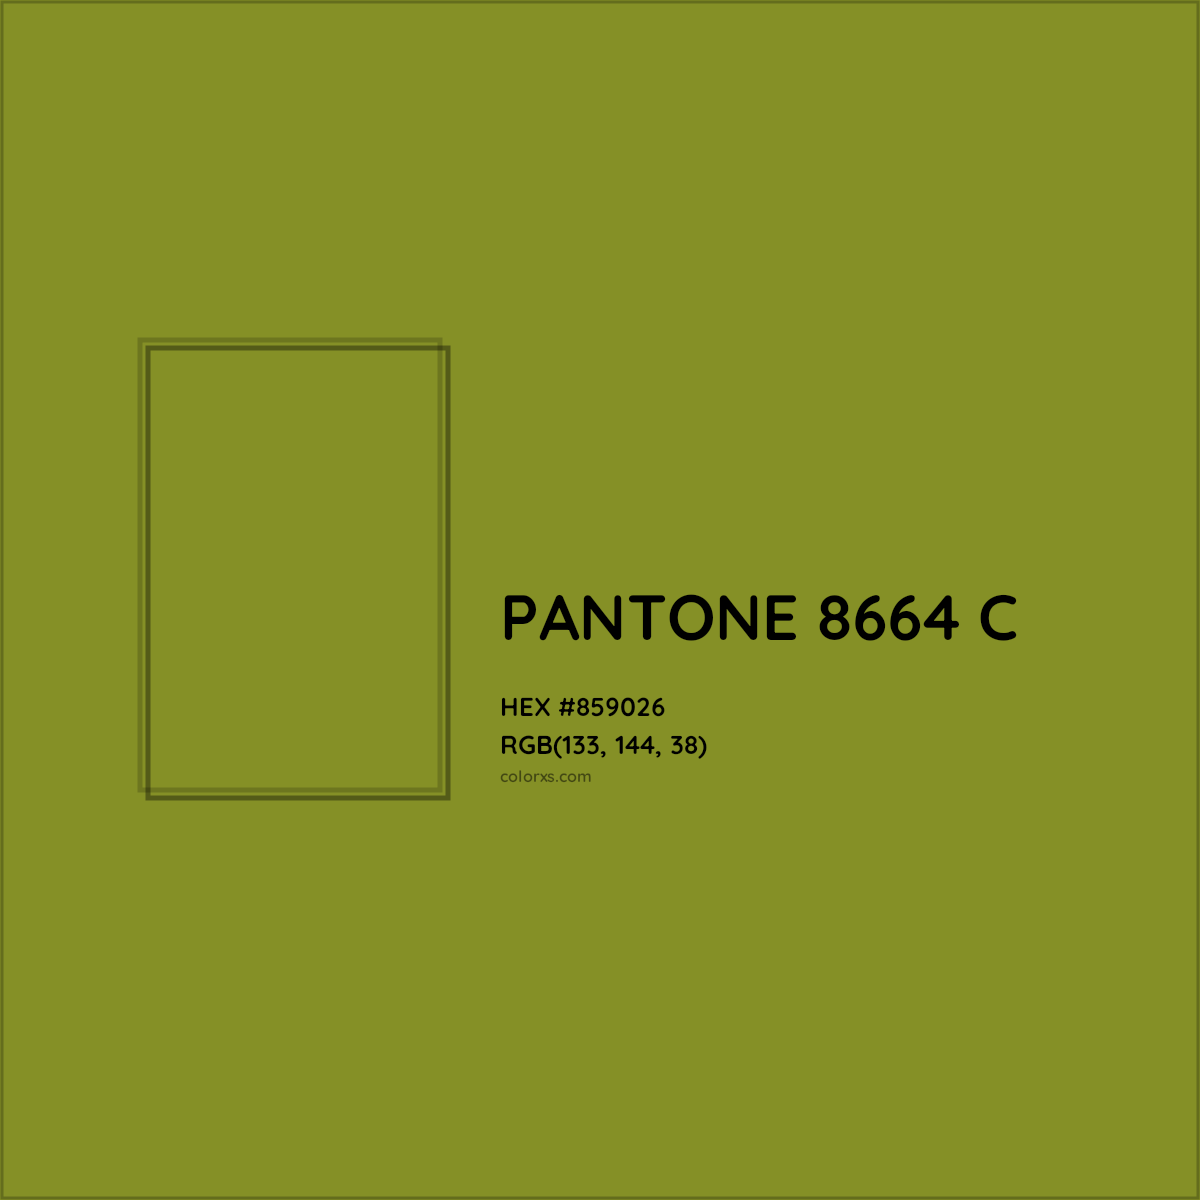 HEX #859026 PANTONE 8664 C CMS Pantone PMS - Color Code